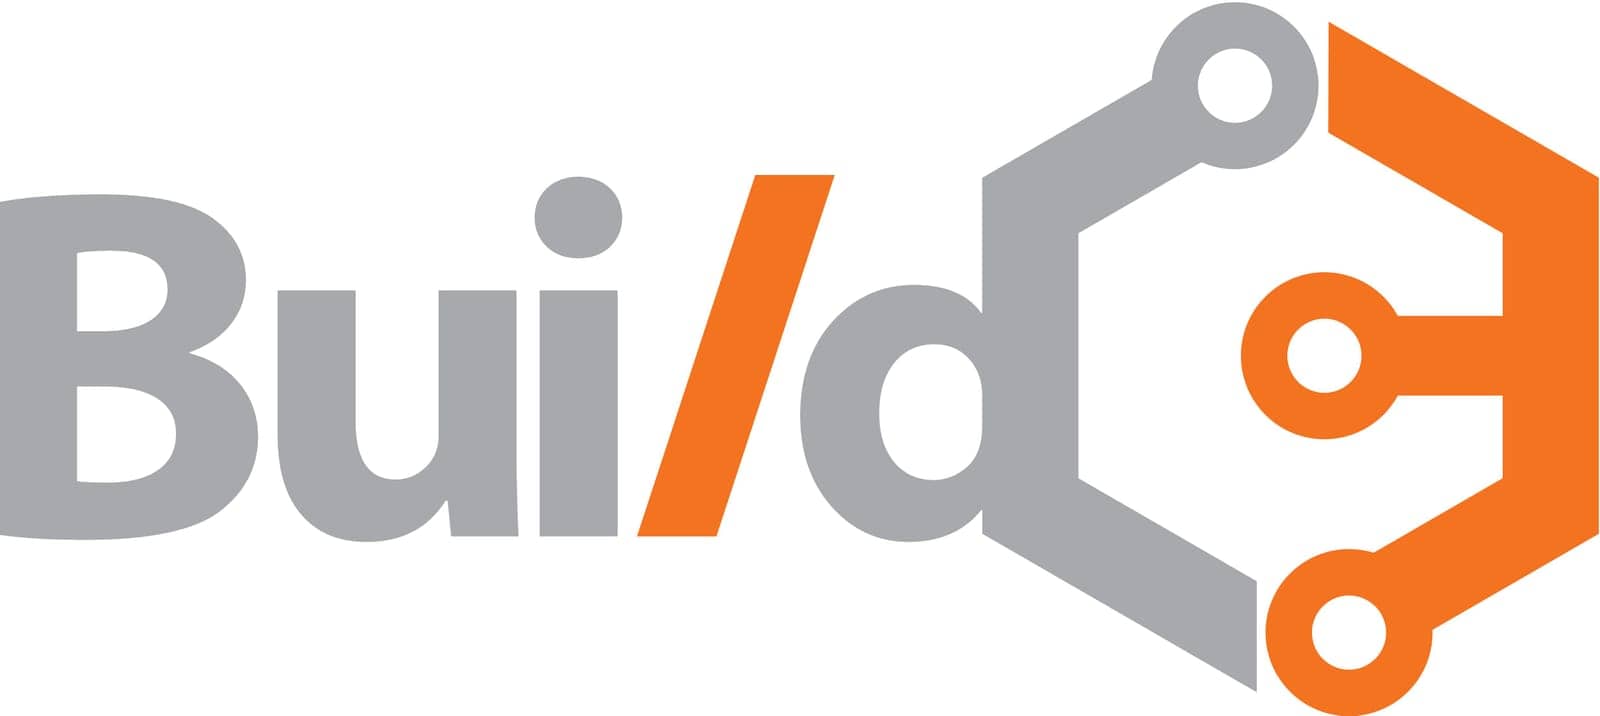 Build Technology Logo Design Template Vector by alluranet